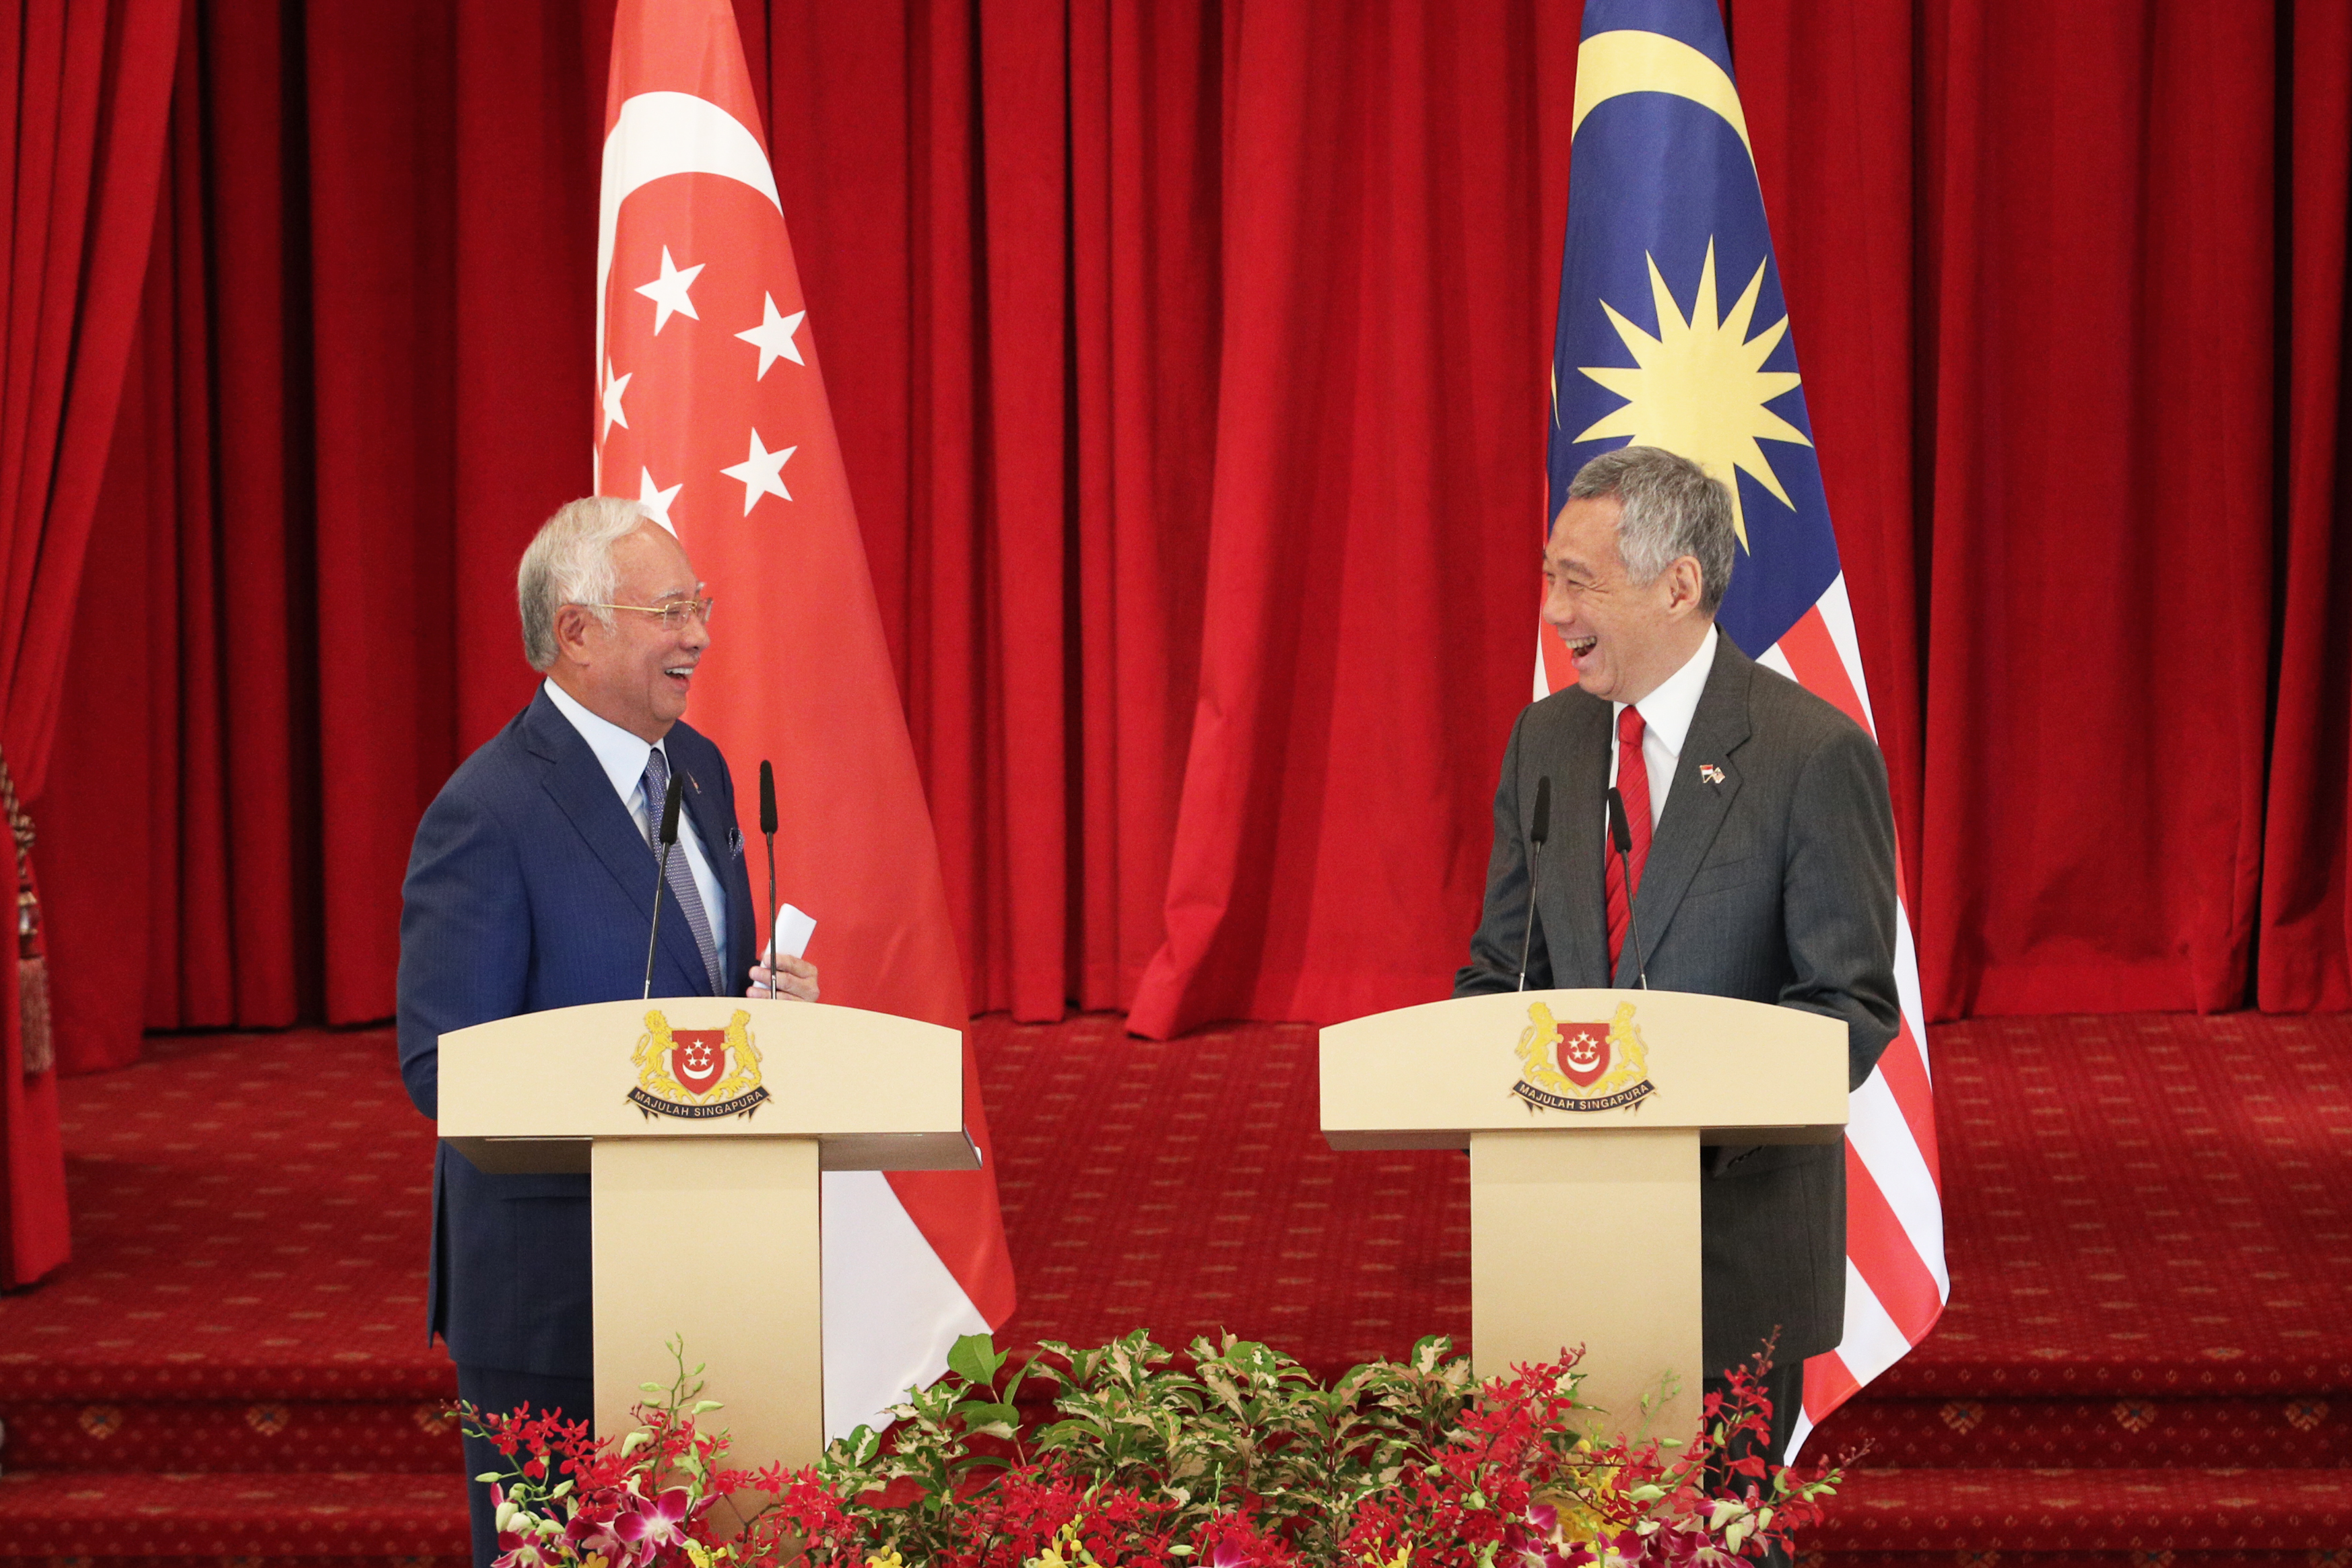 8th Singapore-Malaysia Leaders Retreat (MCI Photo by Kenji Soon)